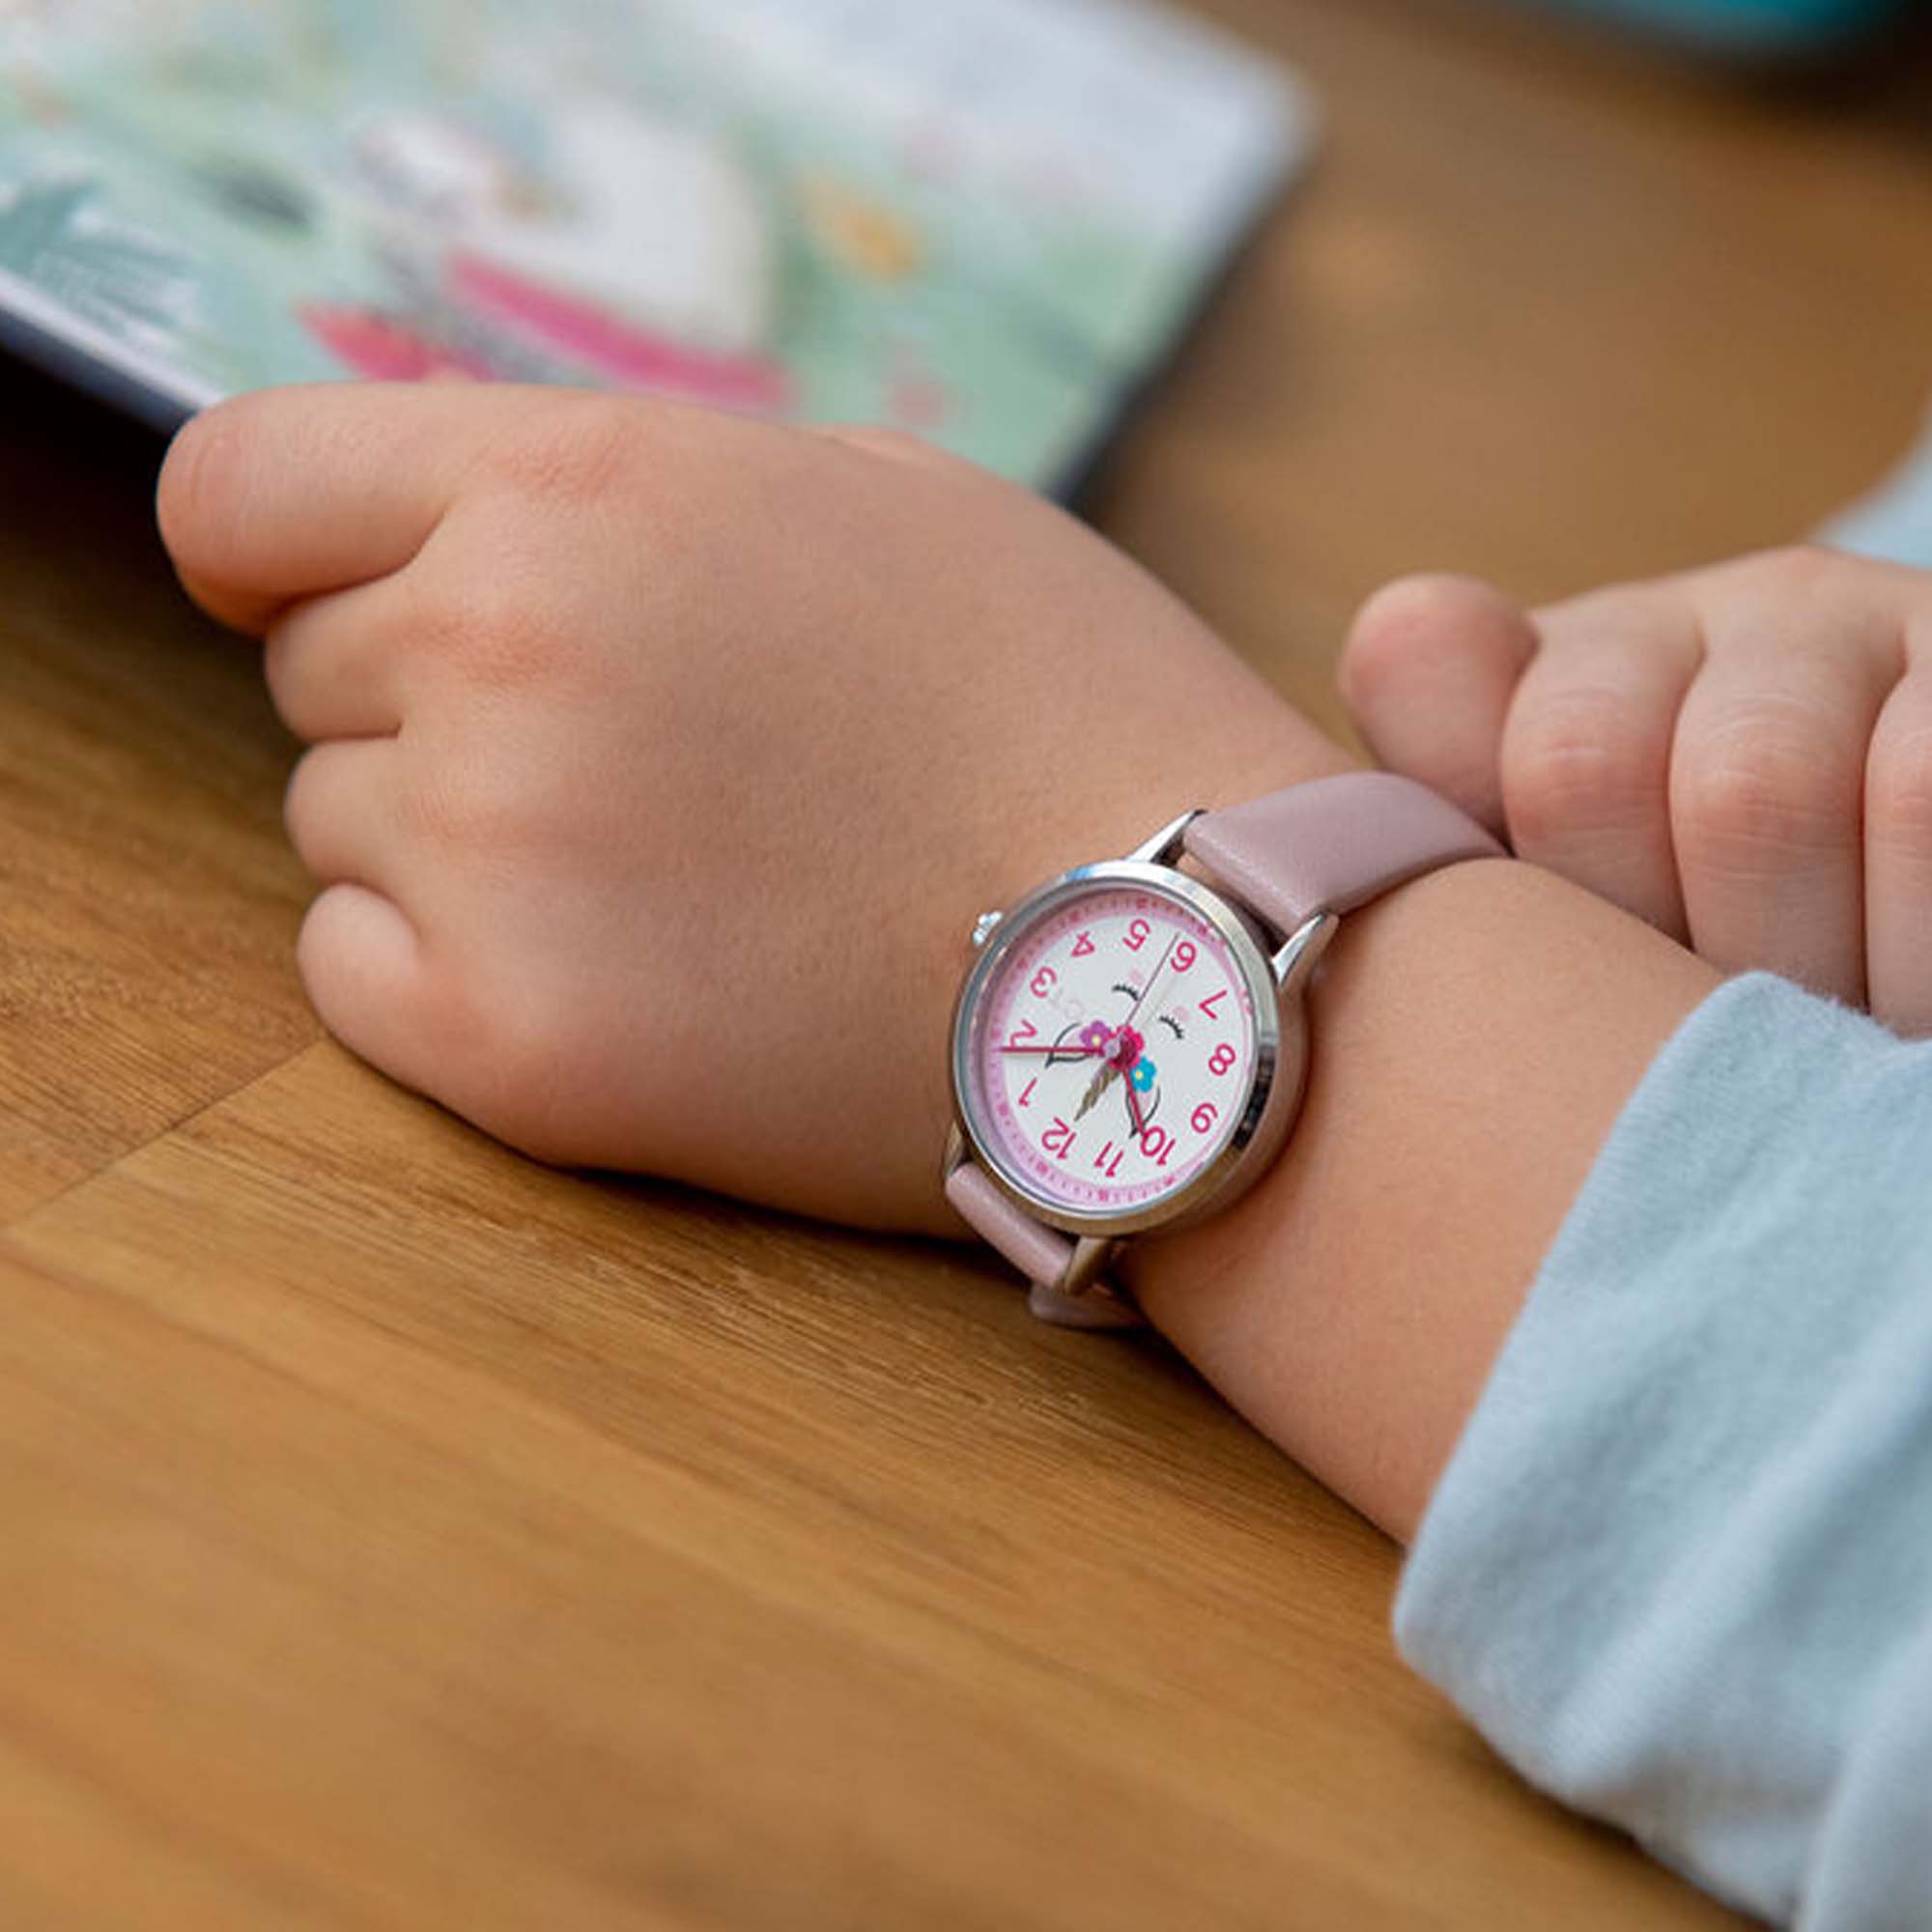 Cool Time Kids Armbanduhr - CT Cool Time GmbH